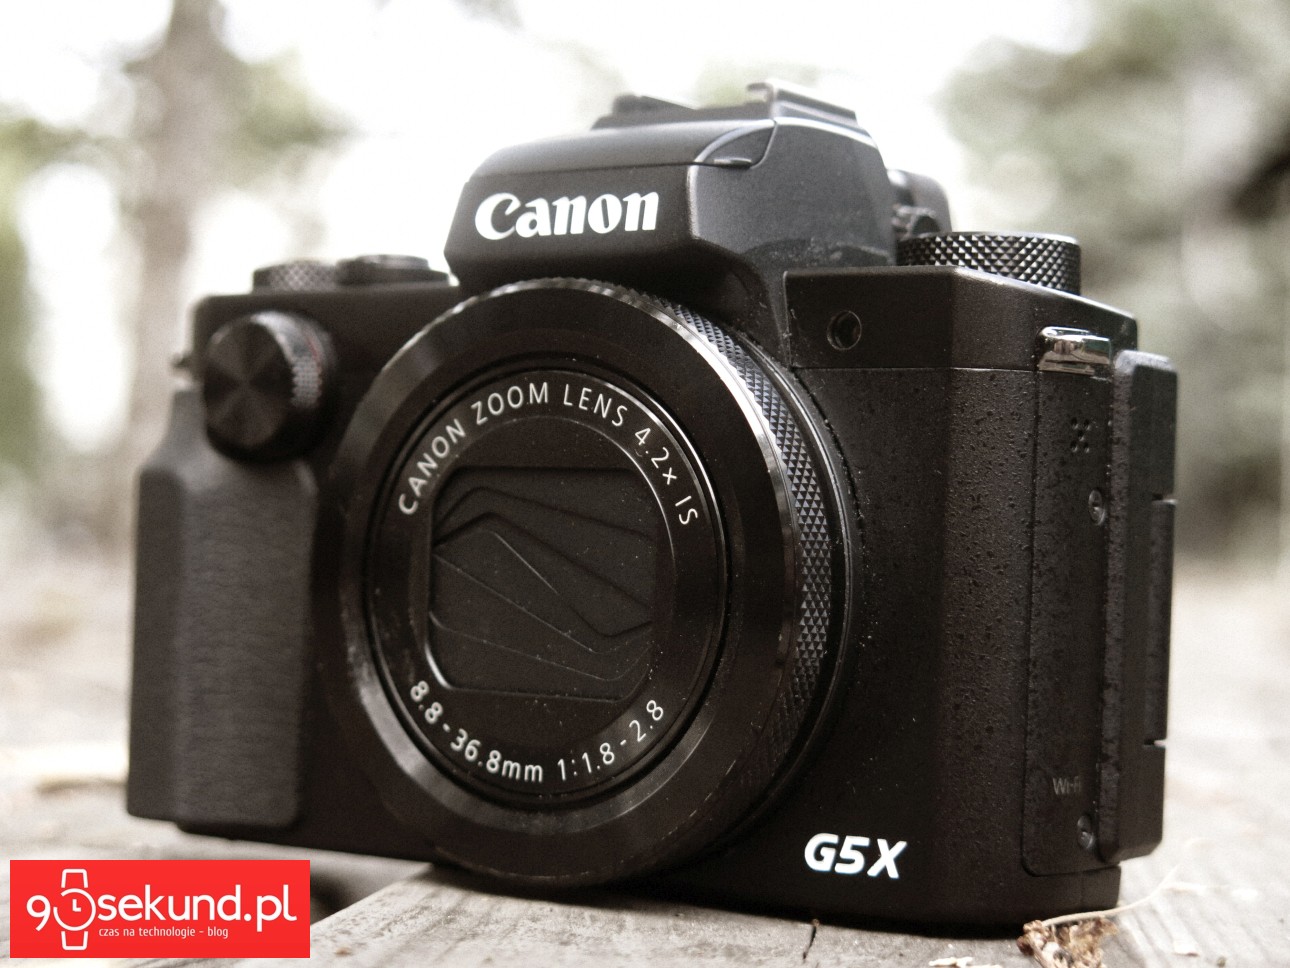 Canon PowerShot G5 X - recenzja 90sekund.pl